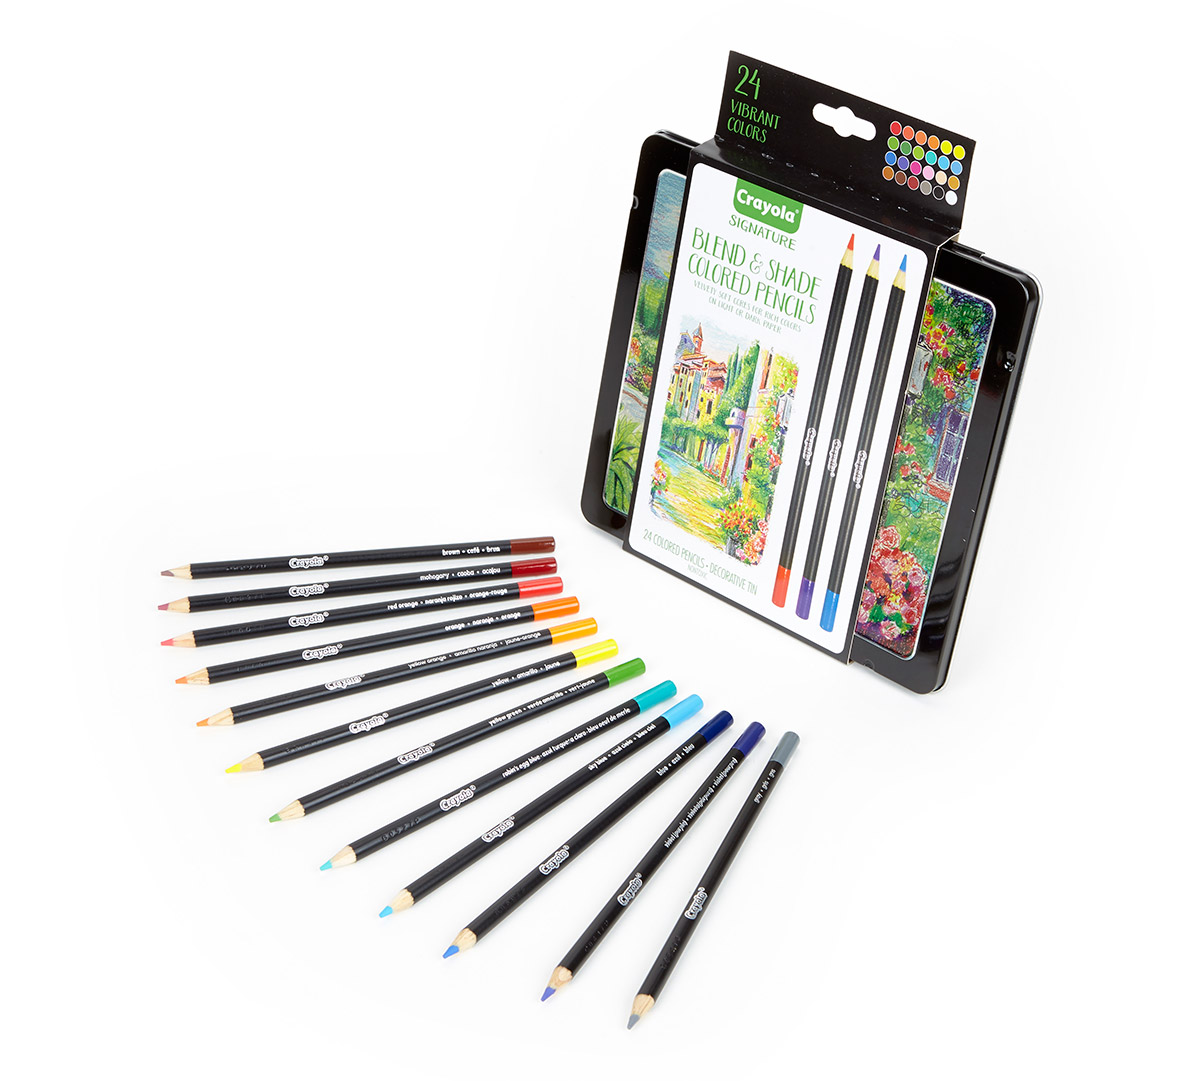 https://shop.crayola.com/on/demandware.static/-/Sites-crayola-storefront/default/dwc95c3809/images/68-2015-0-300_24ct_Signature_Blend-&-Shade_Colored-Pencils_H1.jpg